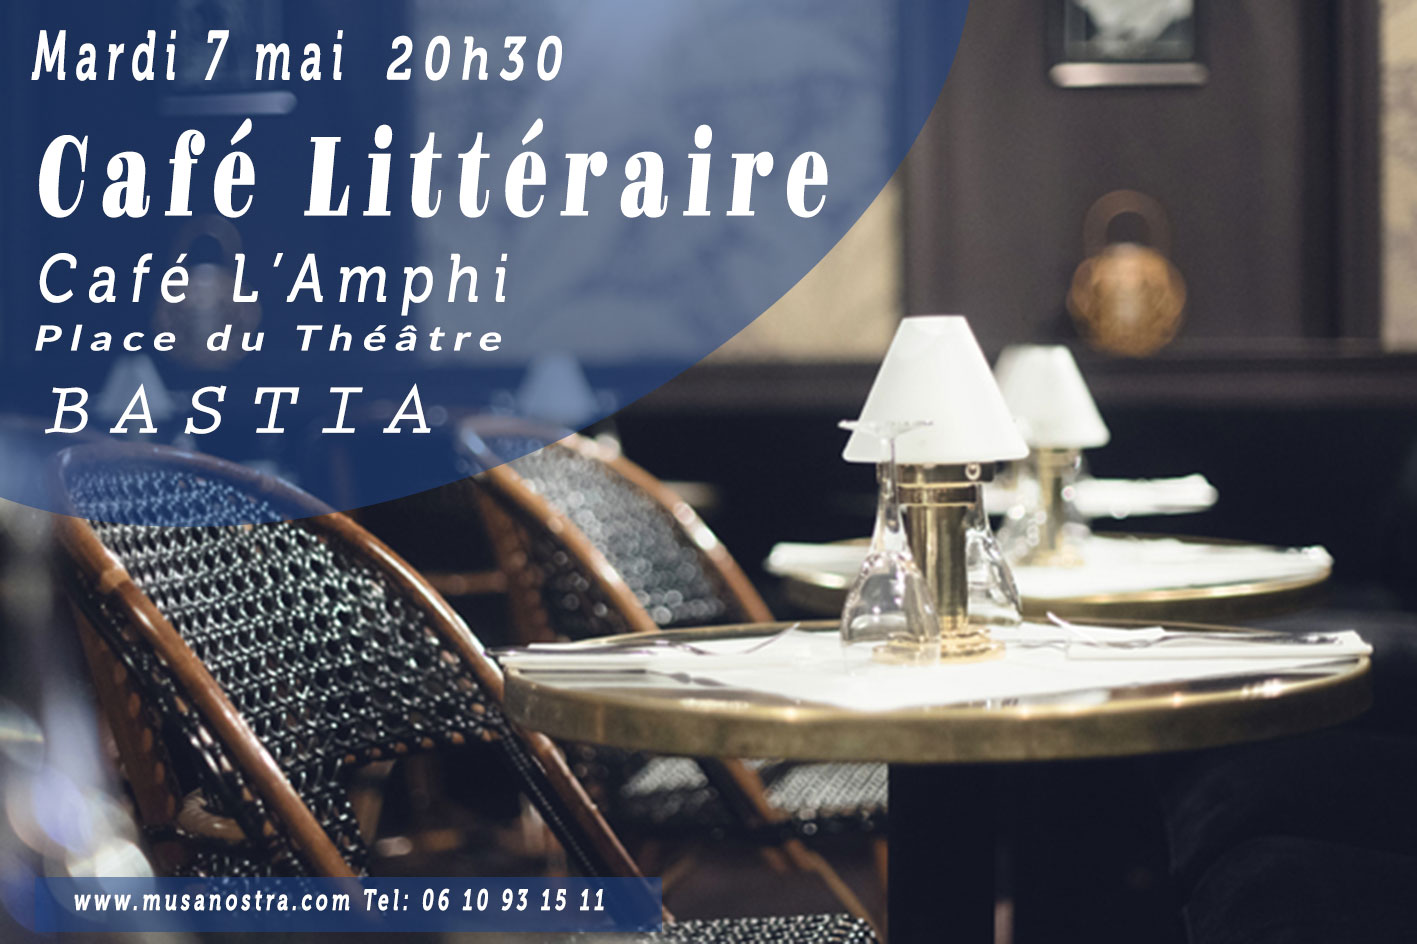 Musanostra organise un café littéraire le 7 mai à Bastia